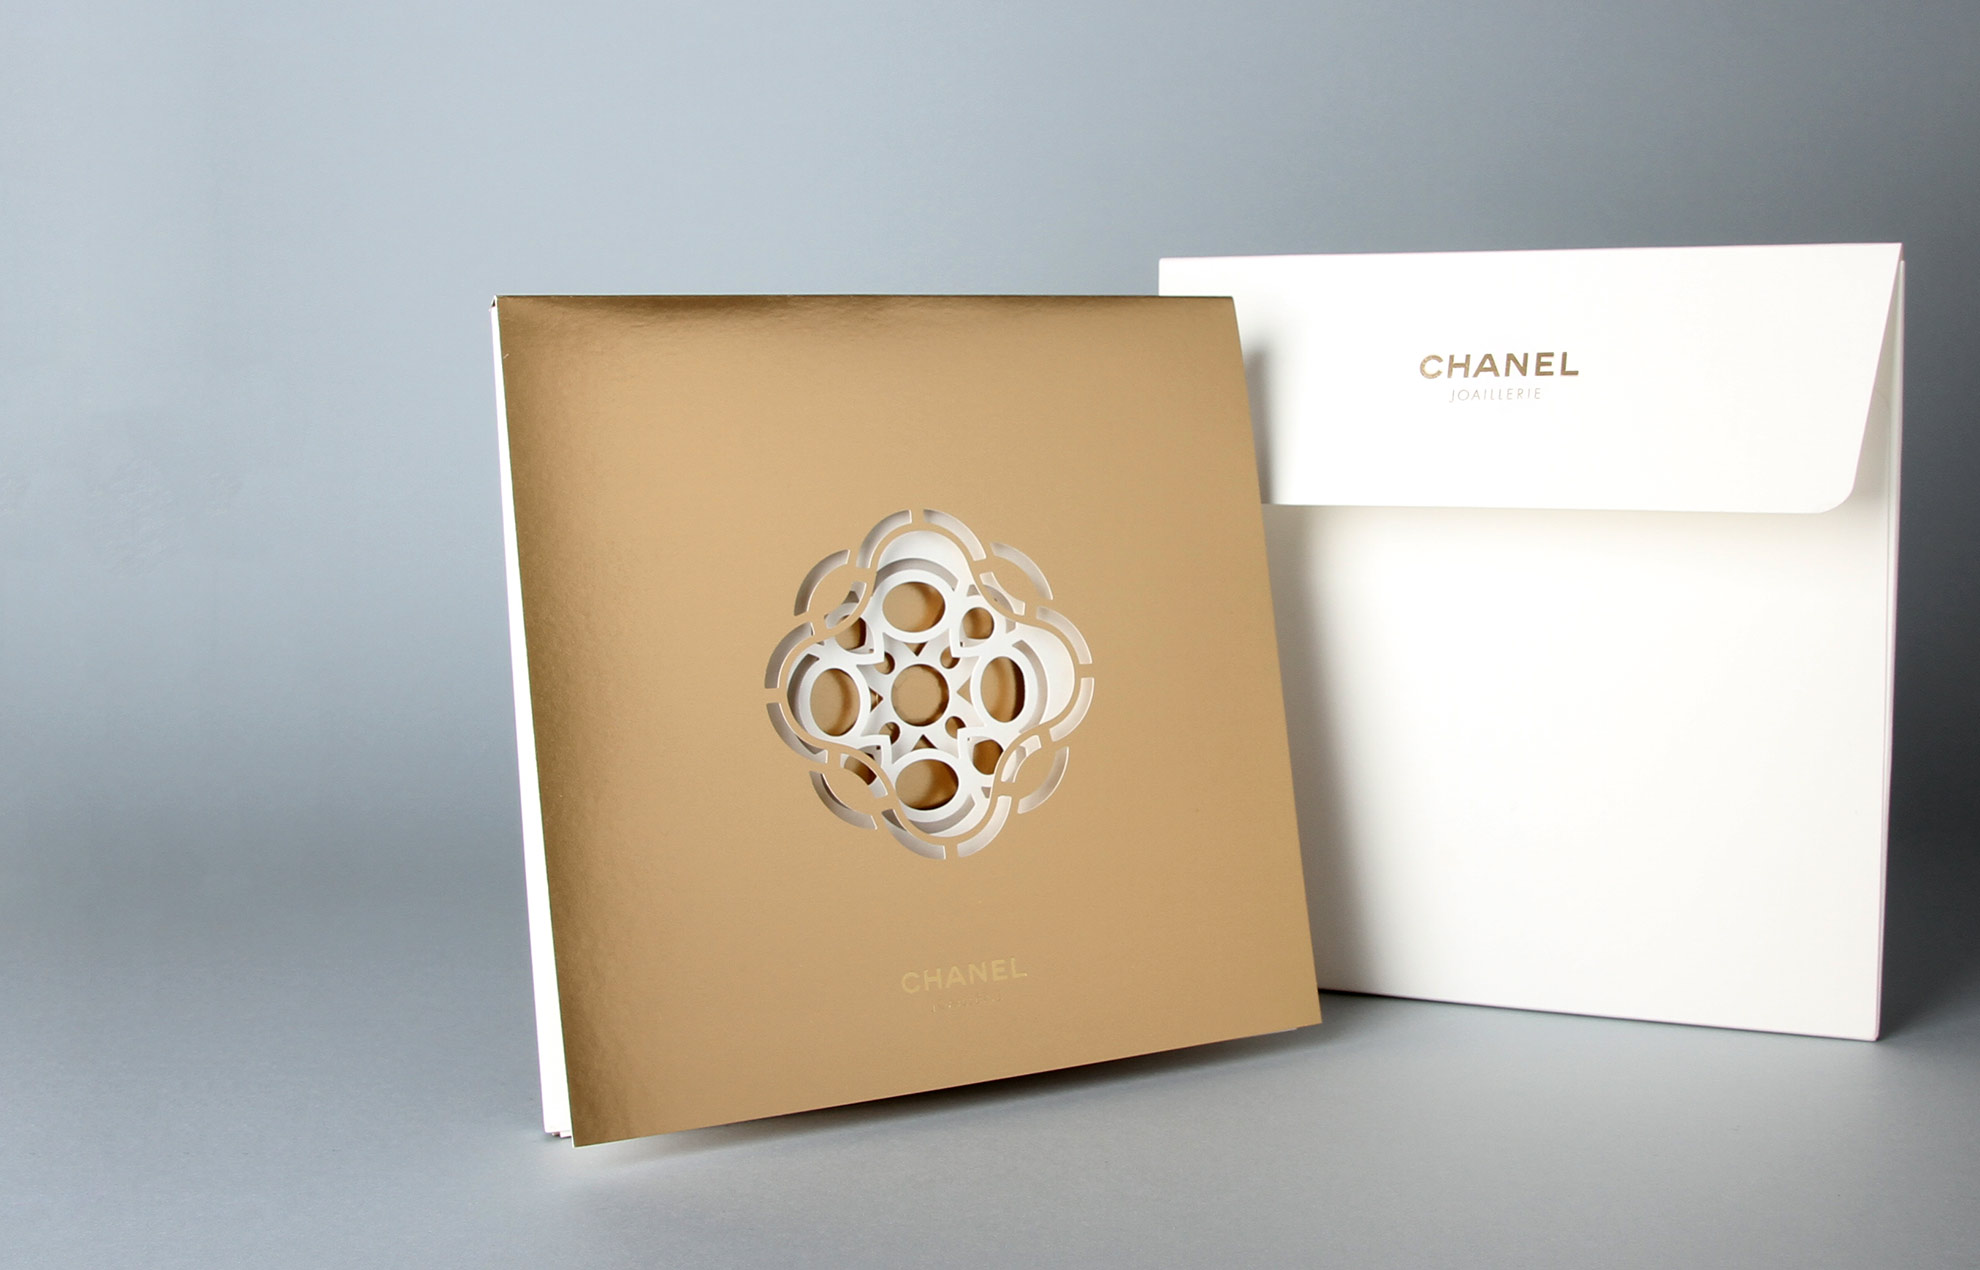 Chanel jewellery - Chanel